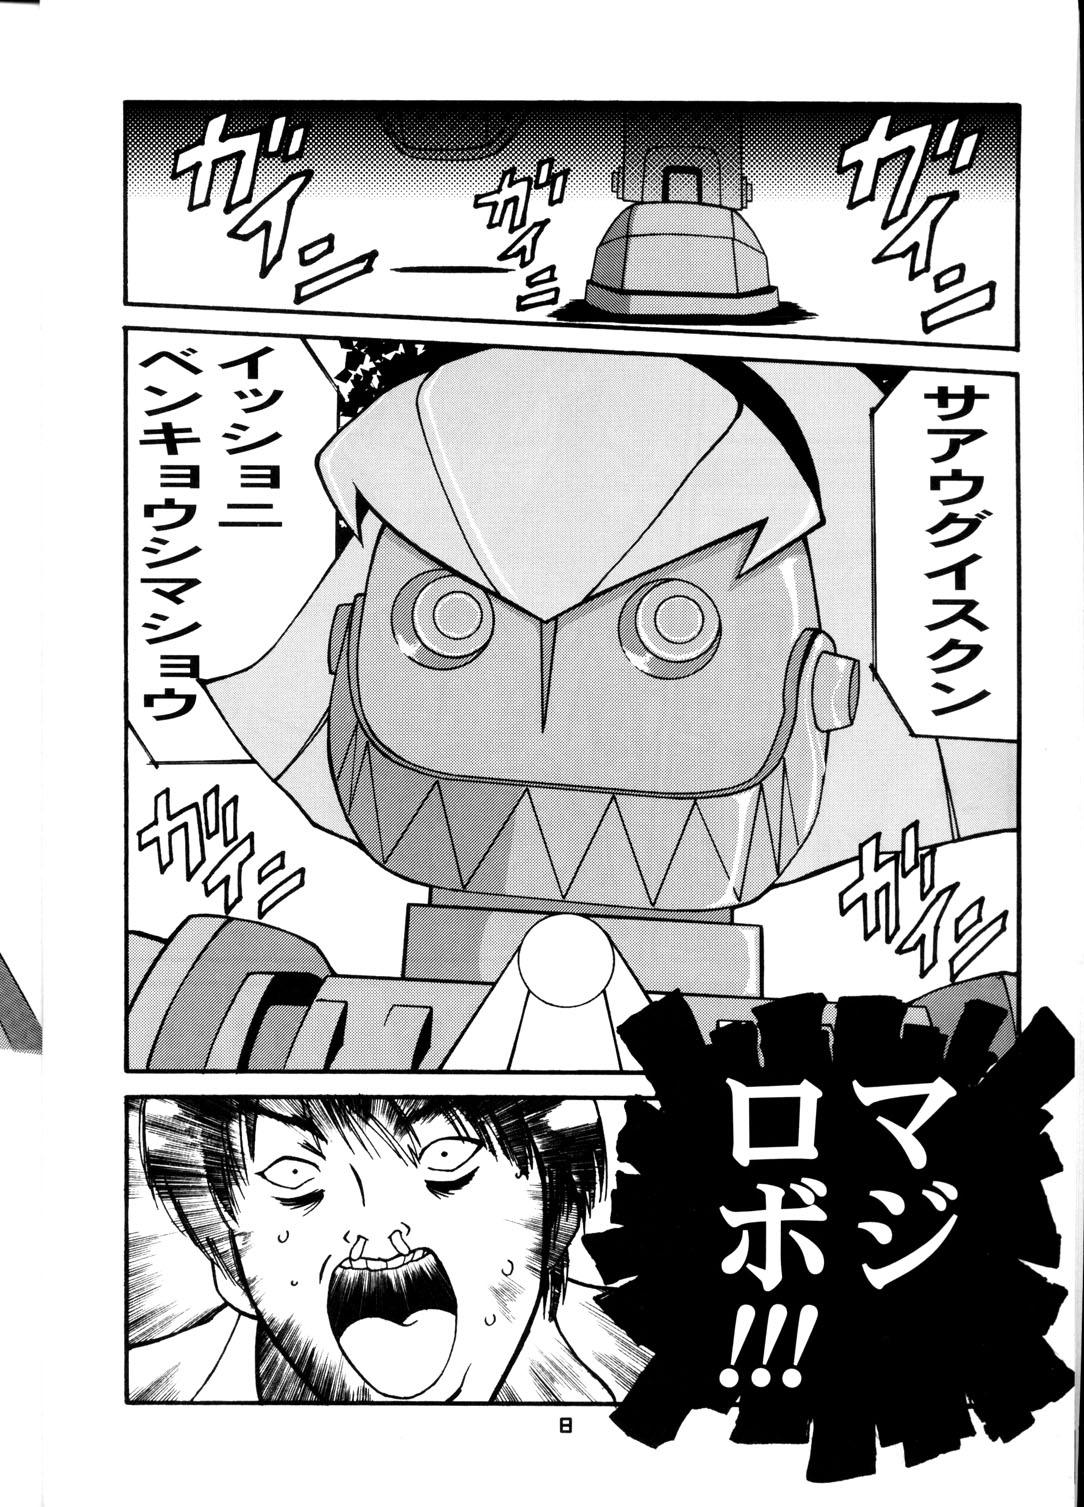 Heels Oh! Robomusume Chuu Shuugou! - Cutey honey The big o Space adventure cobra Megazone 23 Moero robocon Rainbow sentai robin Hotel - Page 8